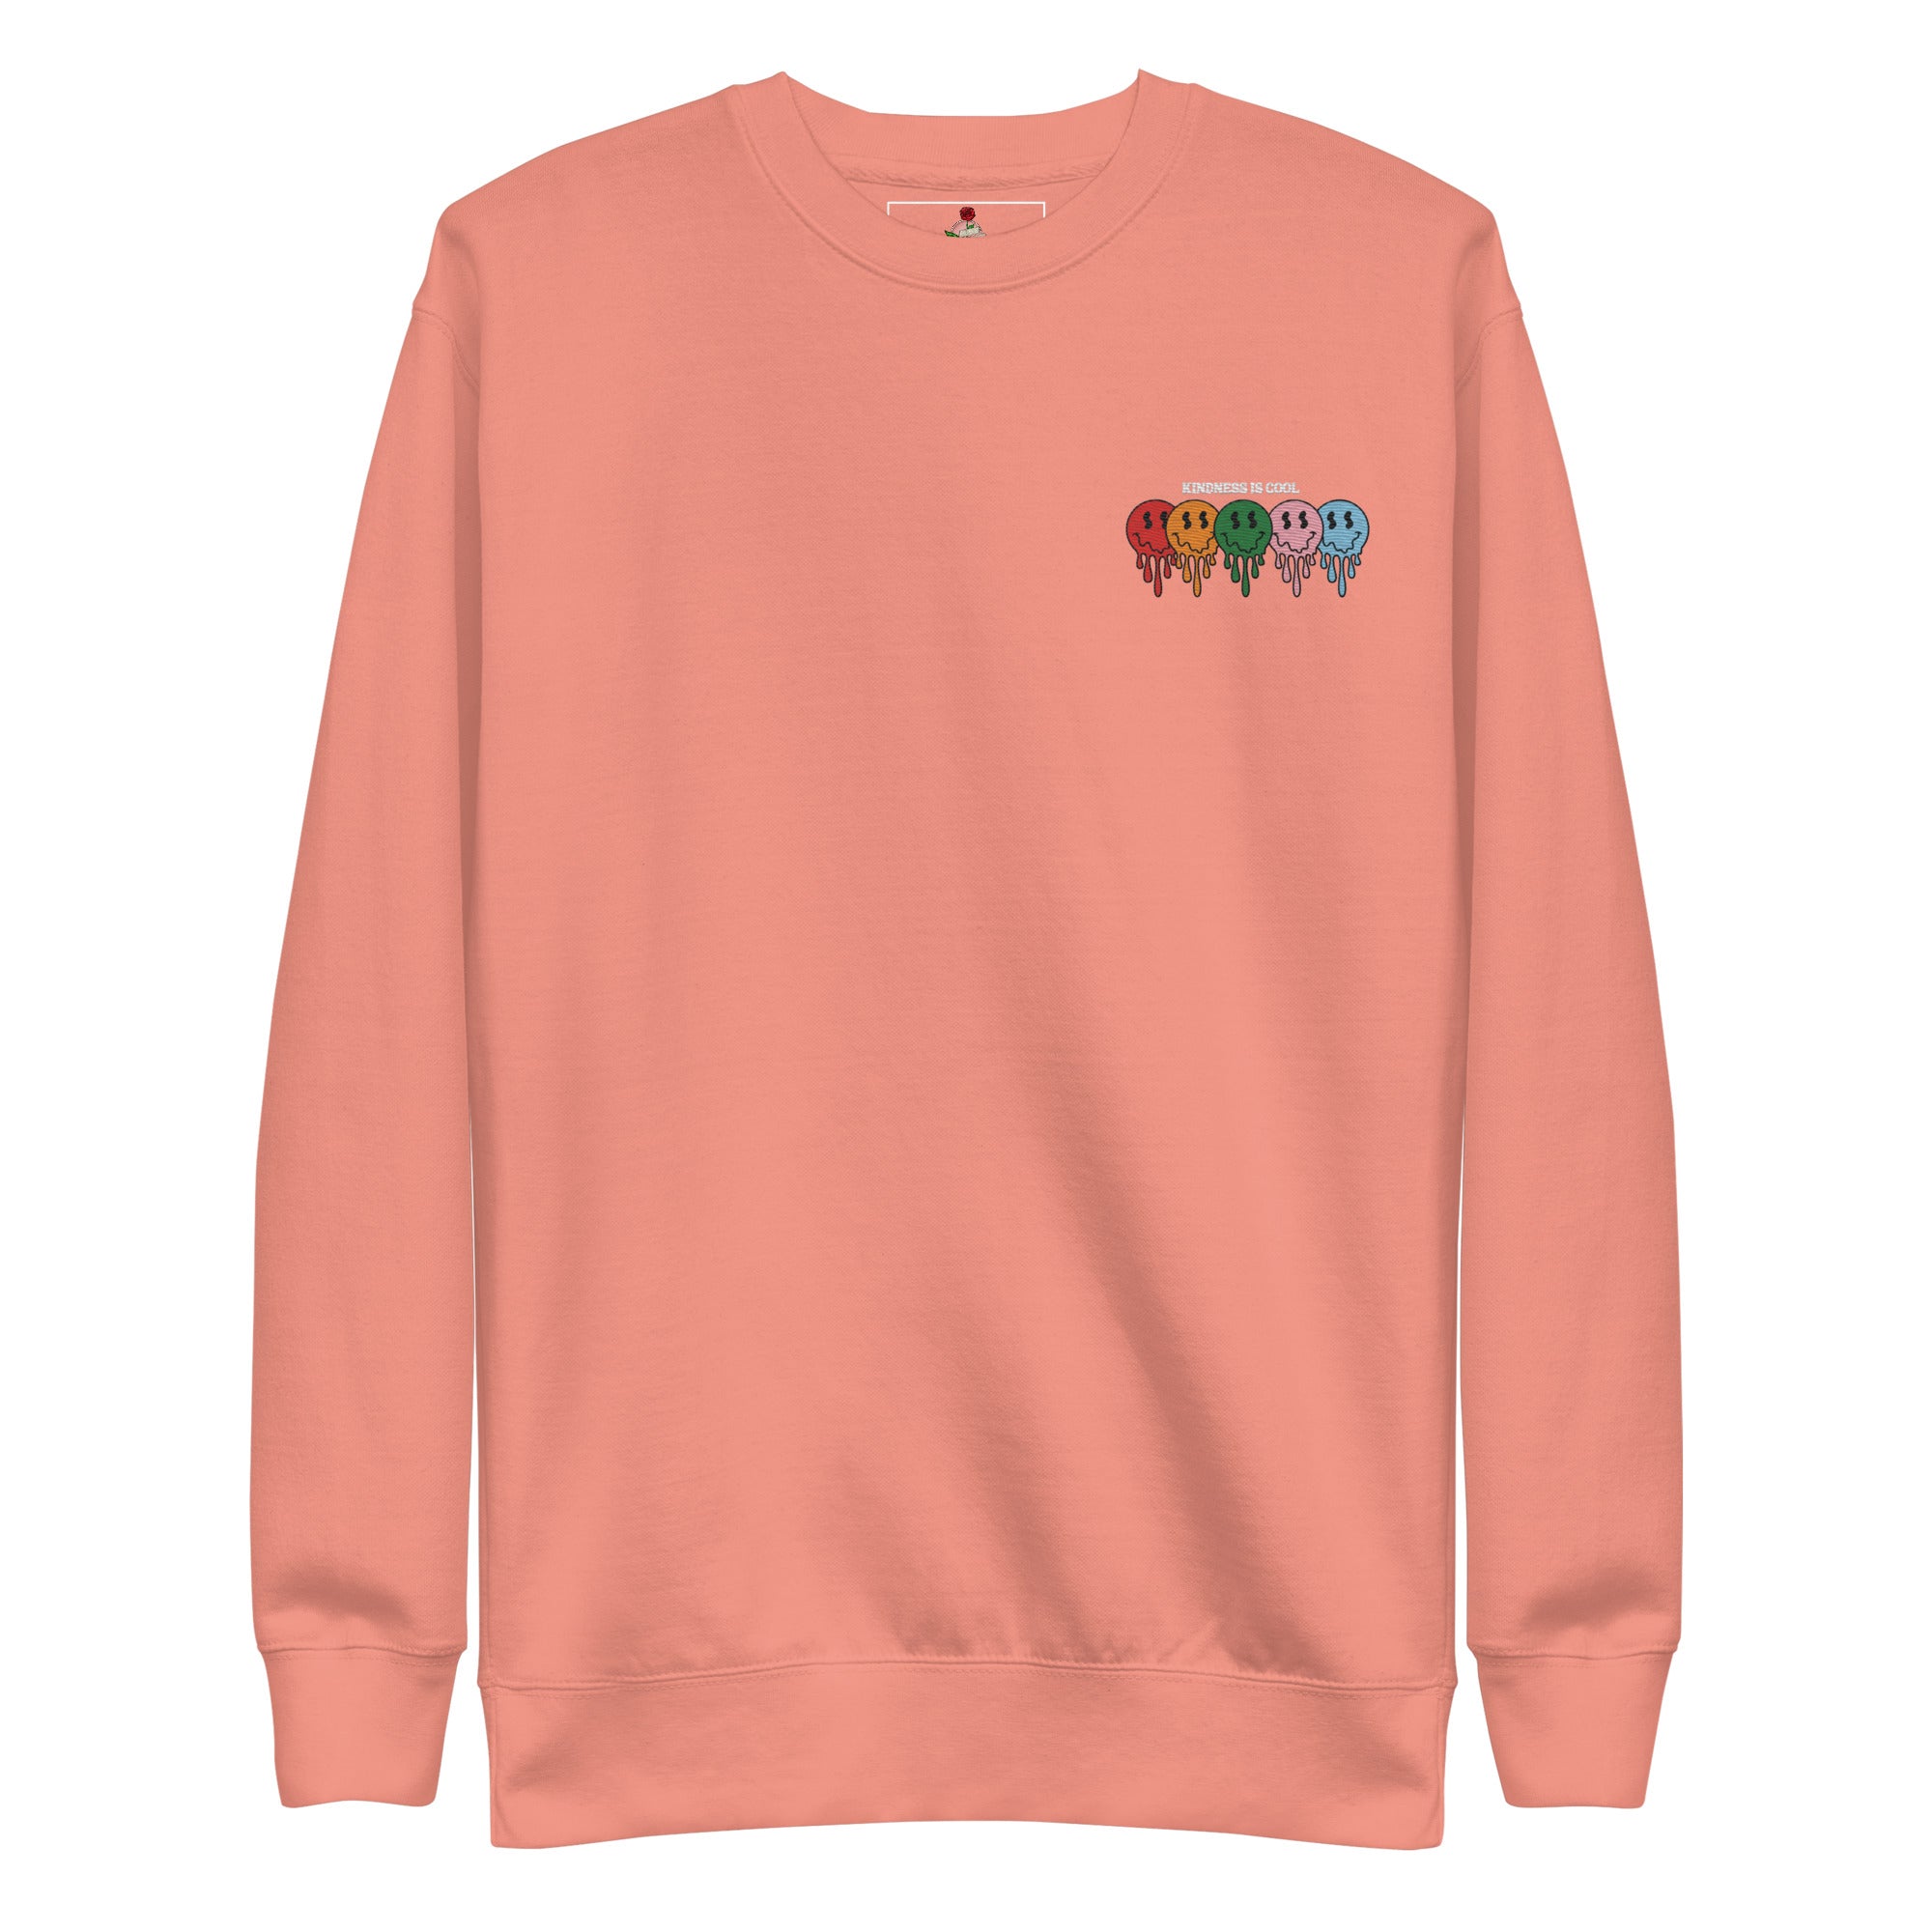 Kindness is Cool Unisex Premium Sweatshirt - Rose Gold Co. Shop